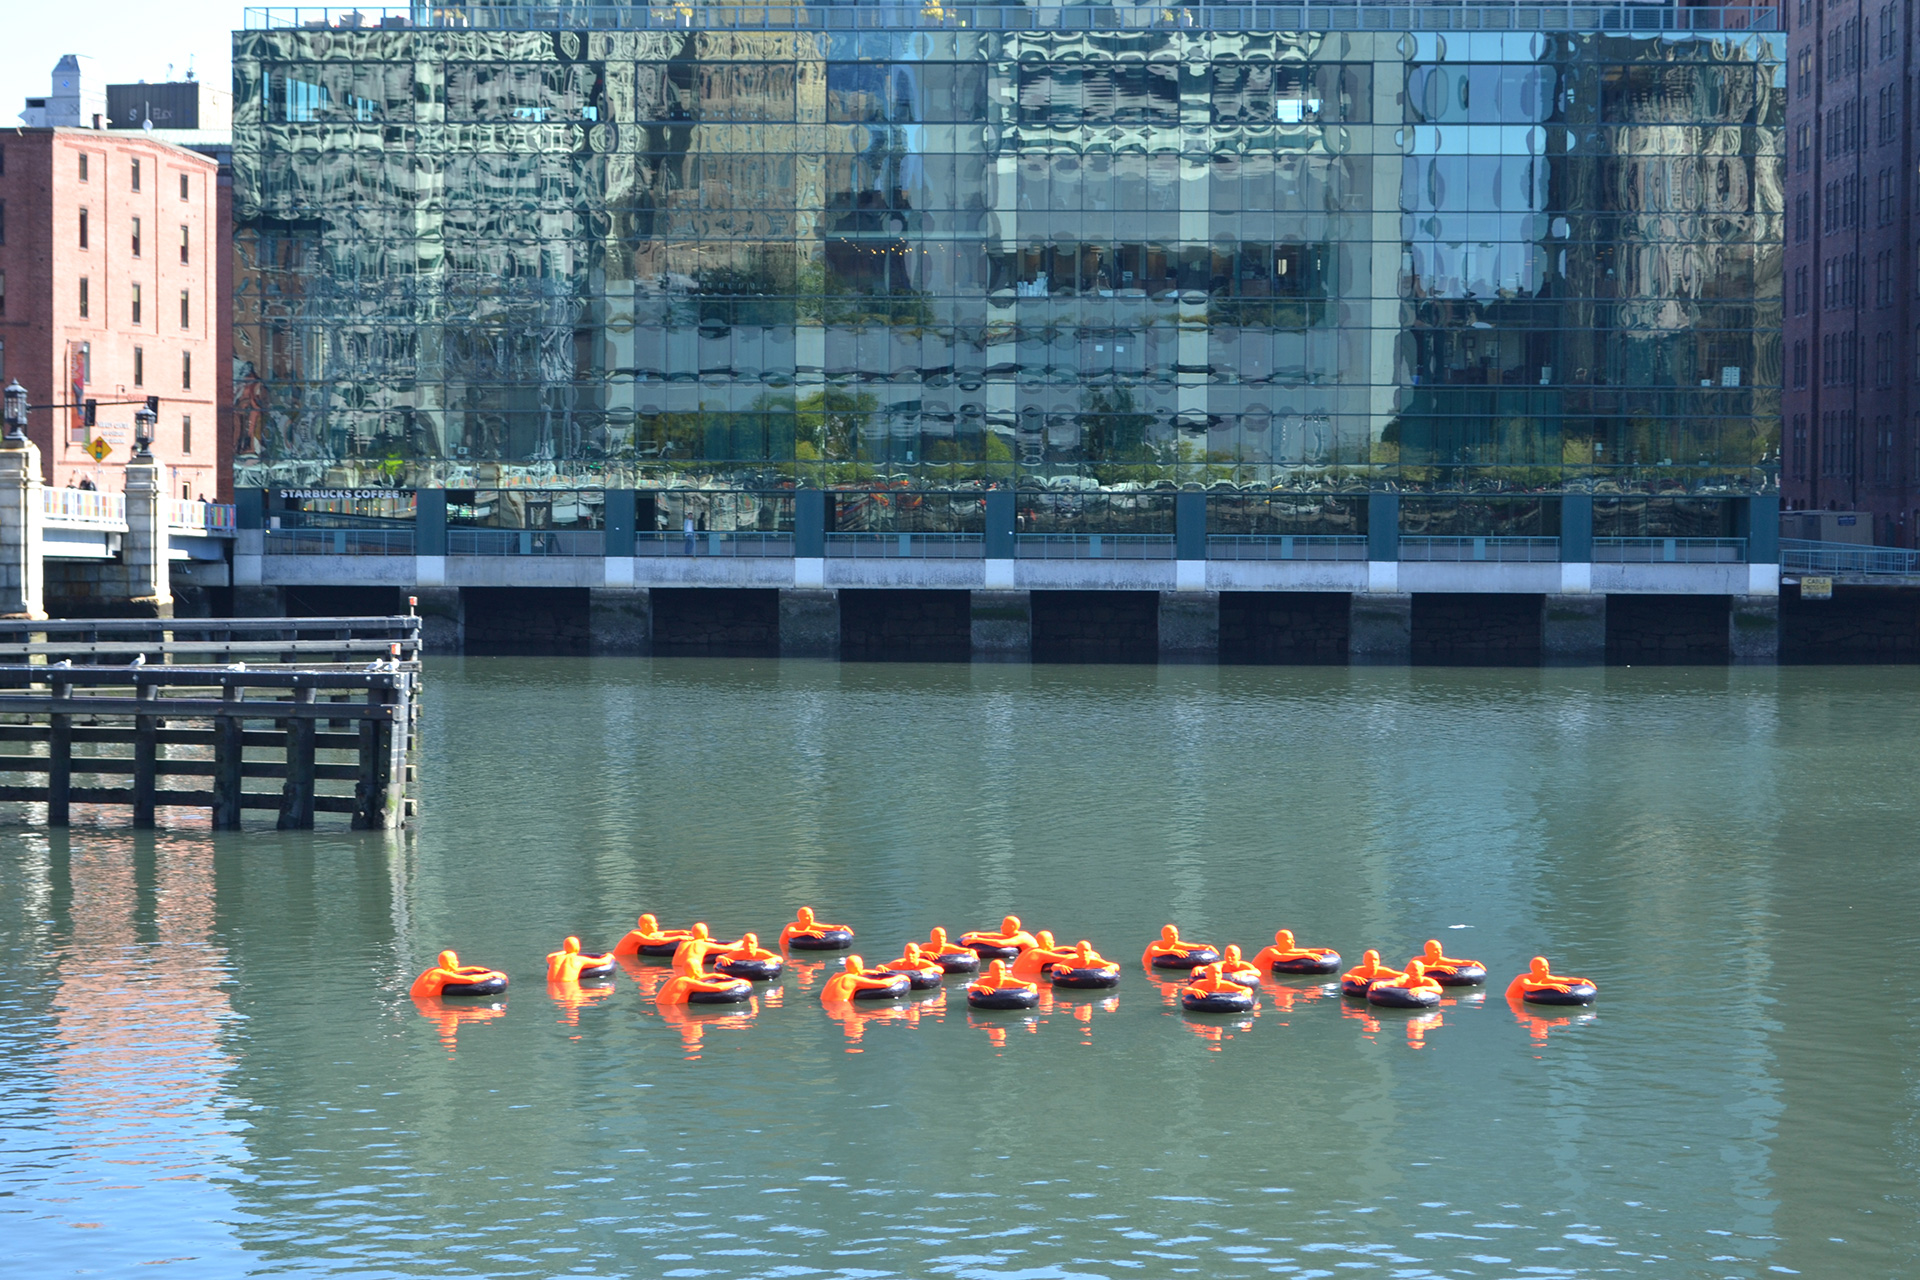 SOS (Safety Orange Swimmers)